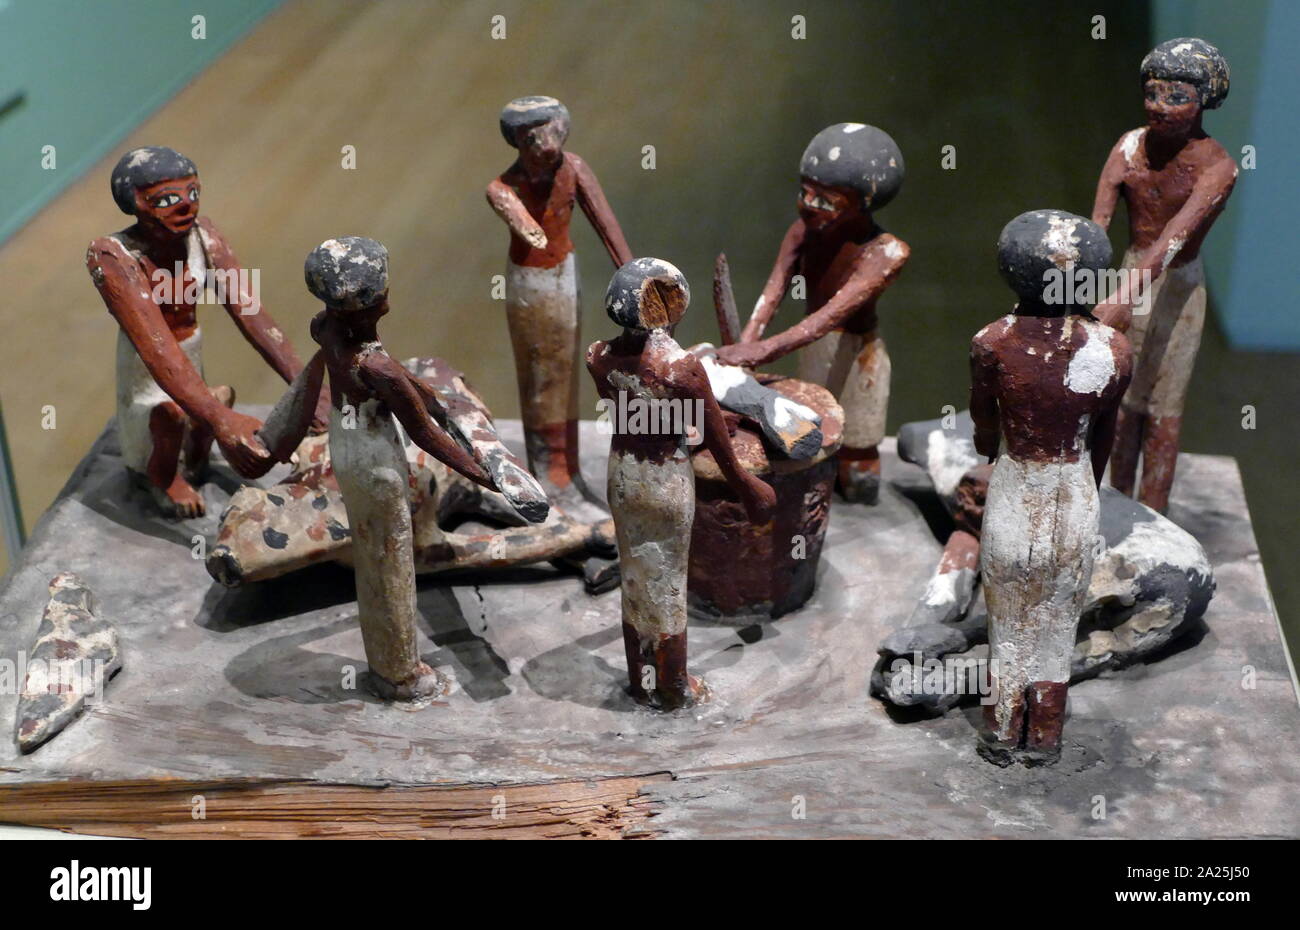 Tumba tesoro, modelo de madera mostrando jornaleros agrícolas alrededor de 1550-1069 a.C., Reino nuevo período. Foto de stock